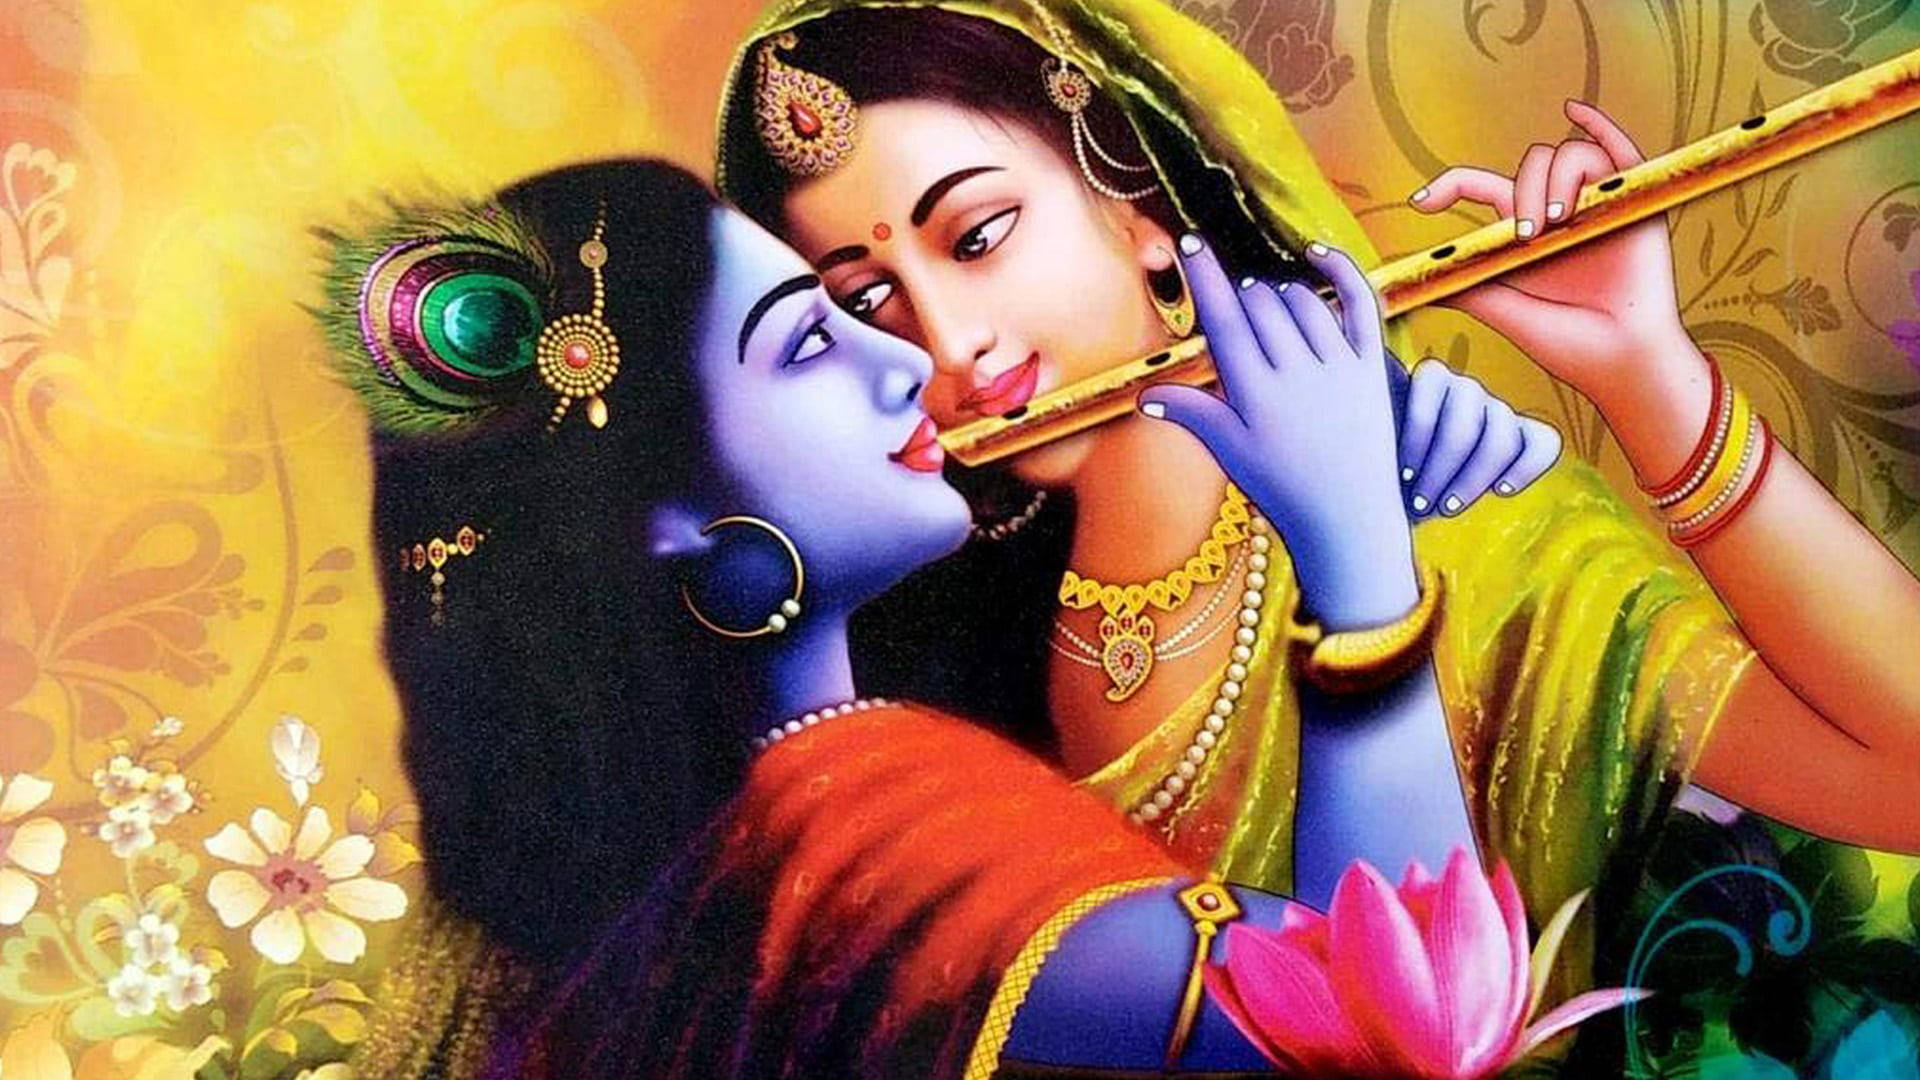 Shri Krishna og Radha intim Bansuri Artfuld Wallpaper Wallpaper